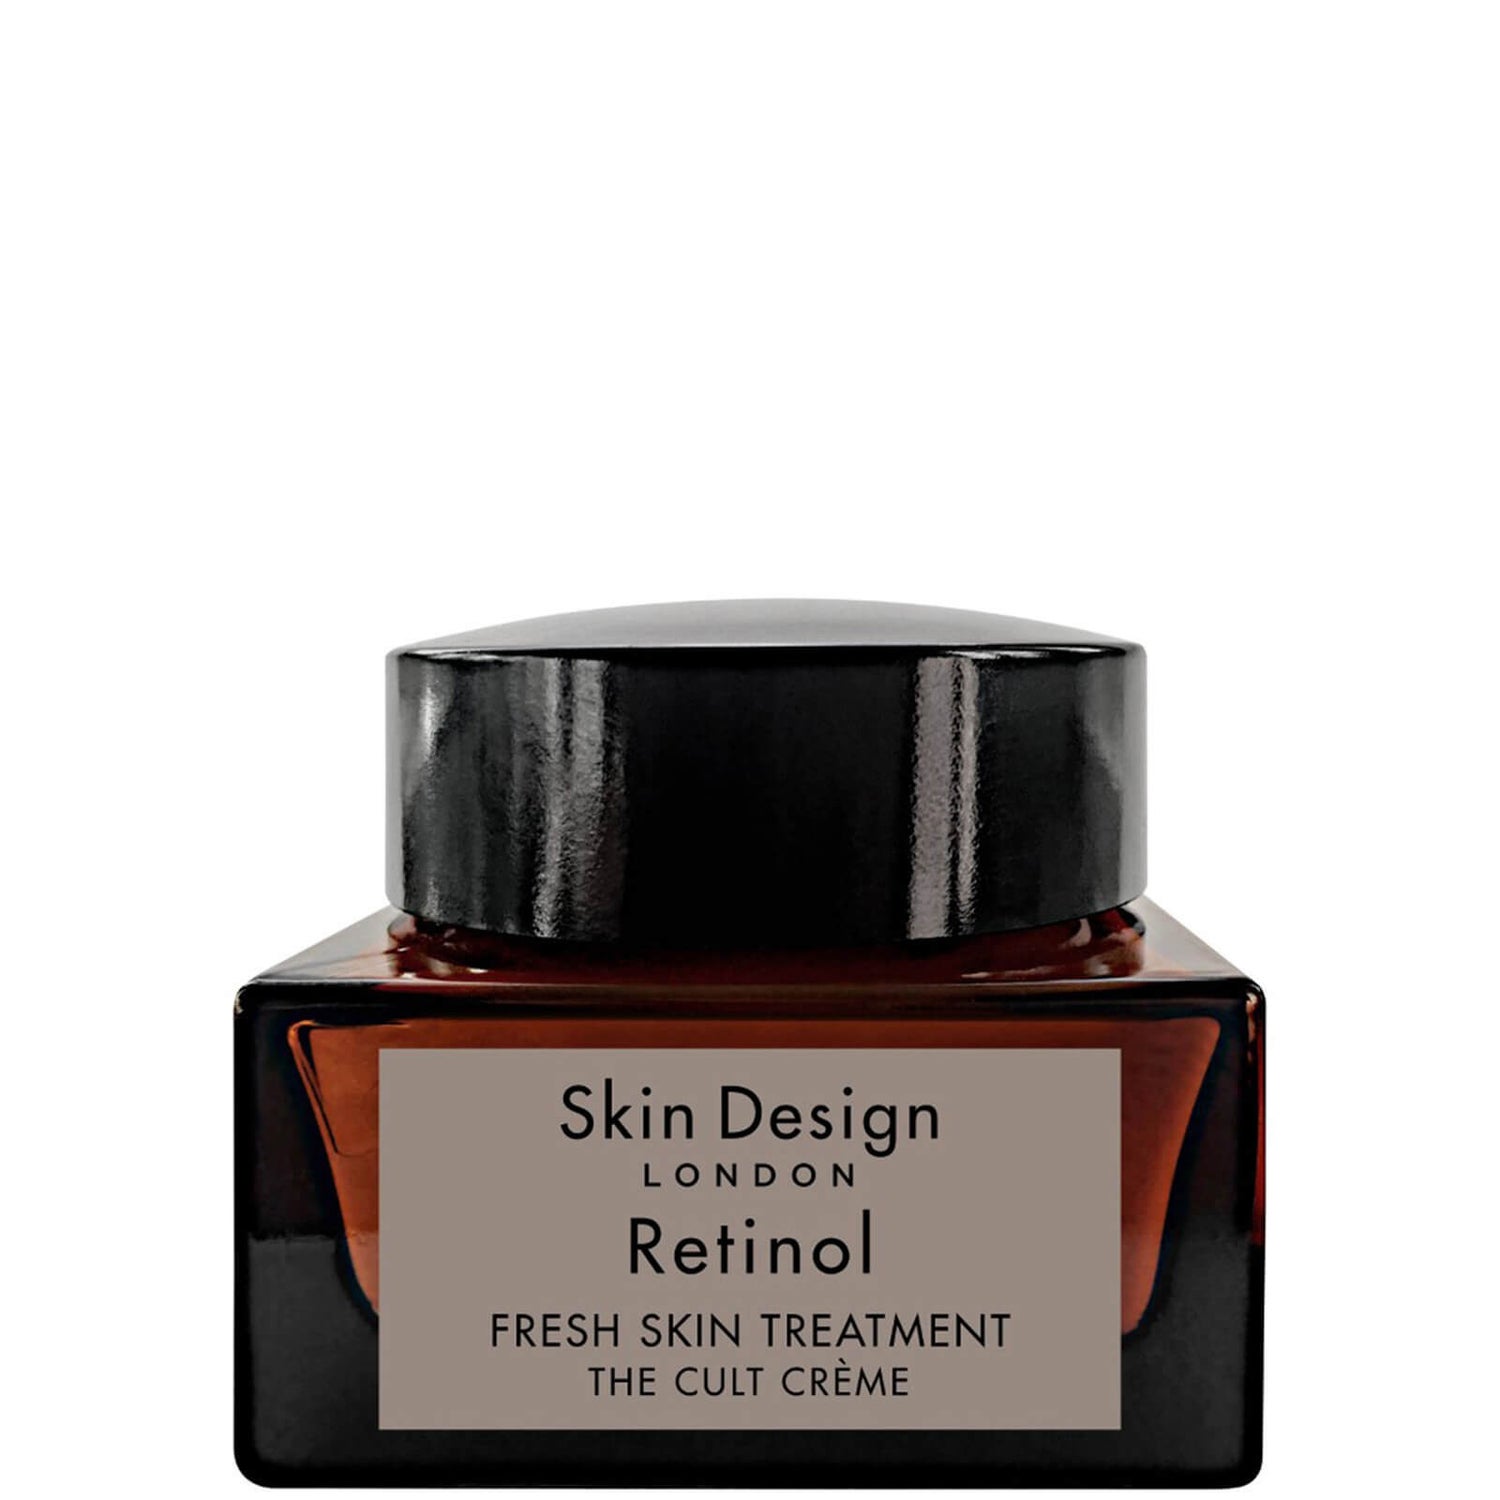 Skin Design London Retinol - Fresh Skin Treatment